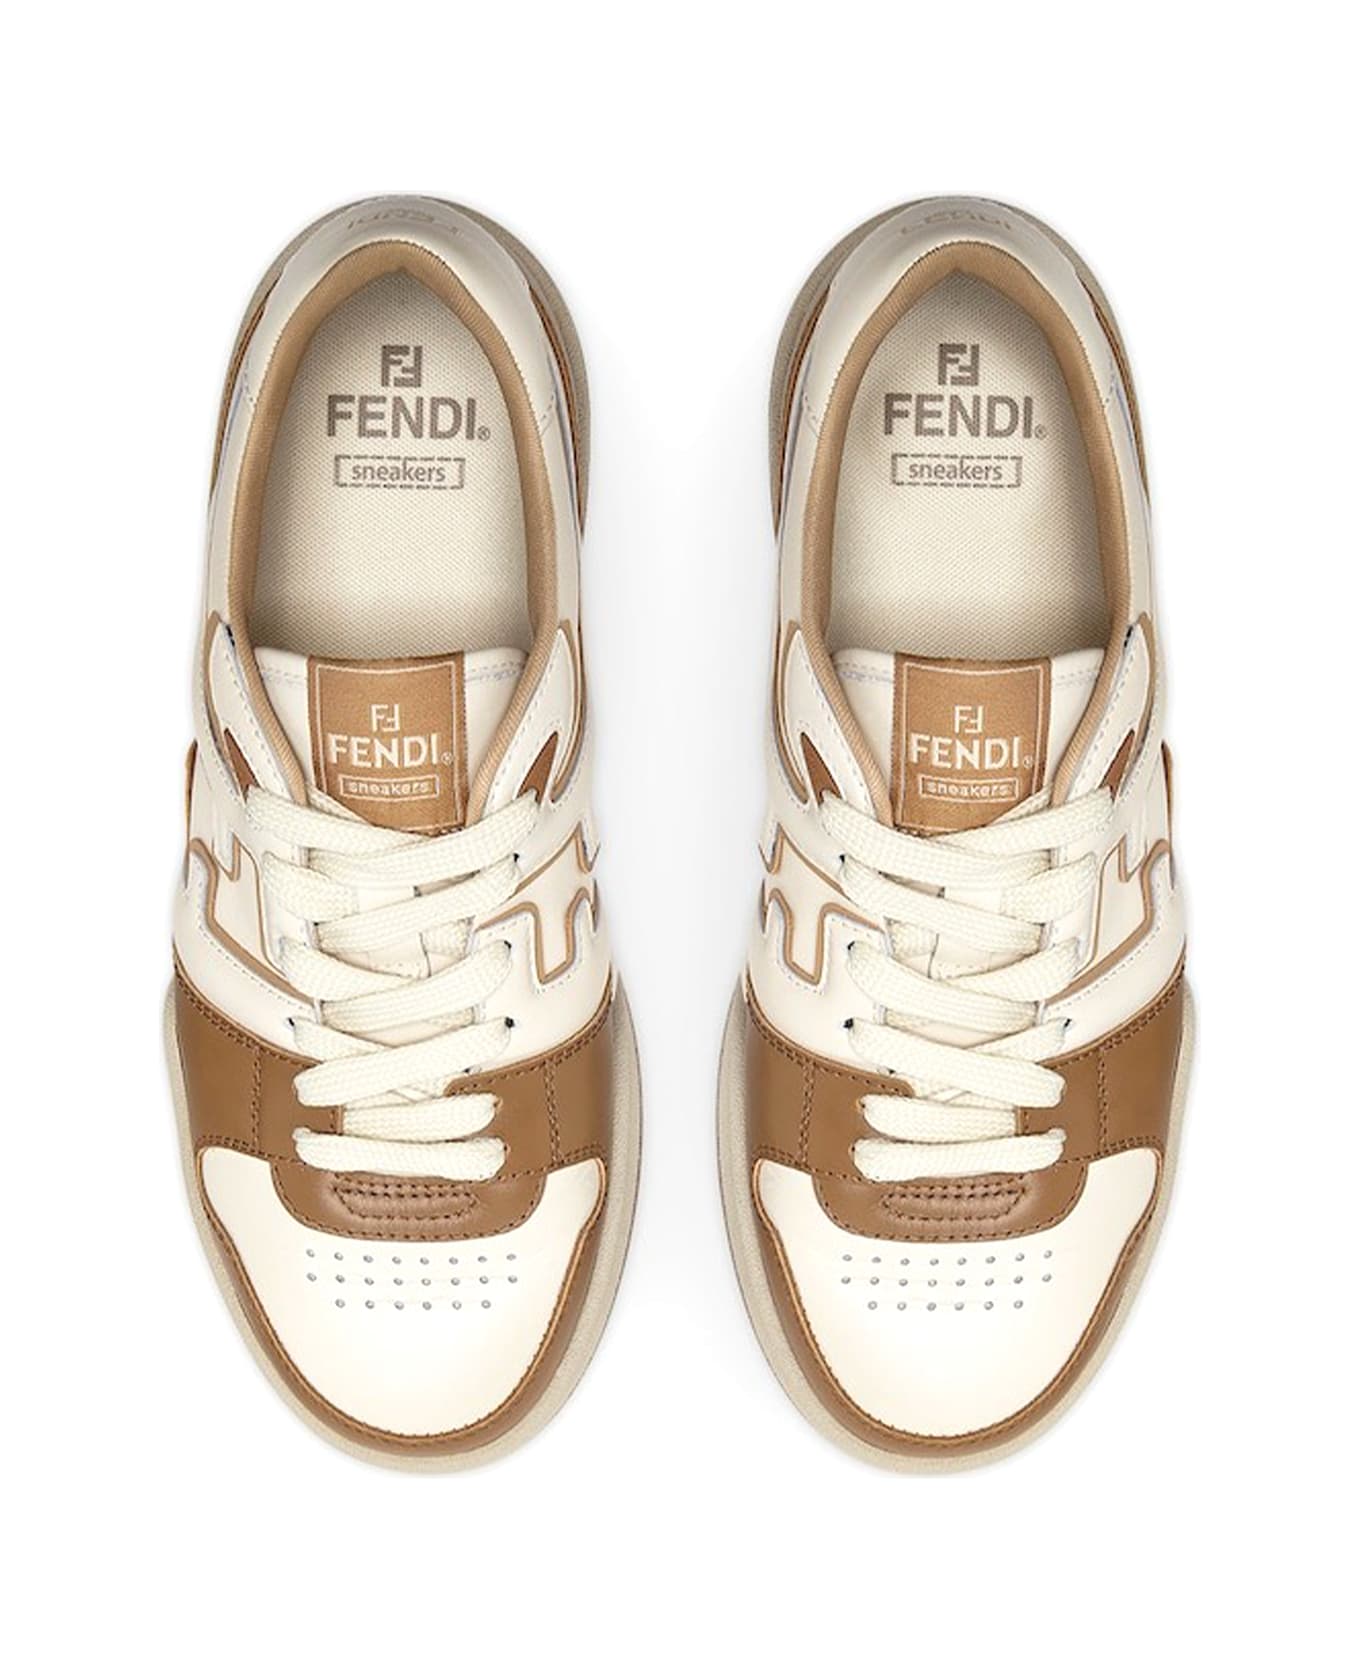 Fendi Low Top Sneaker In Brown Leather - NOCCIOLA BIANCO MOU MOU